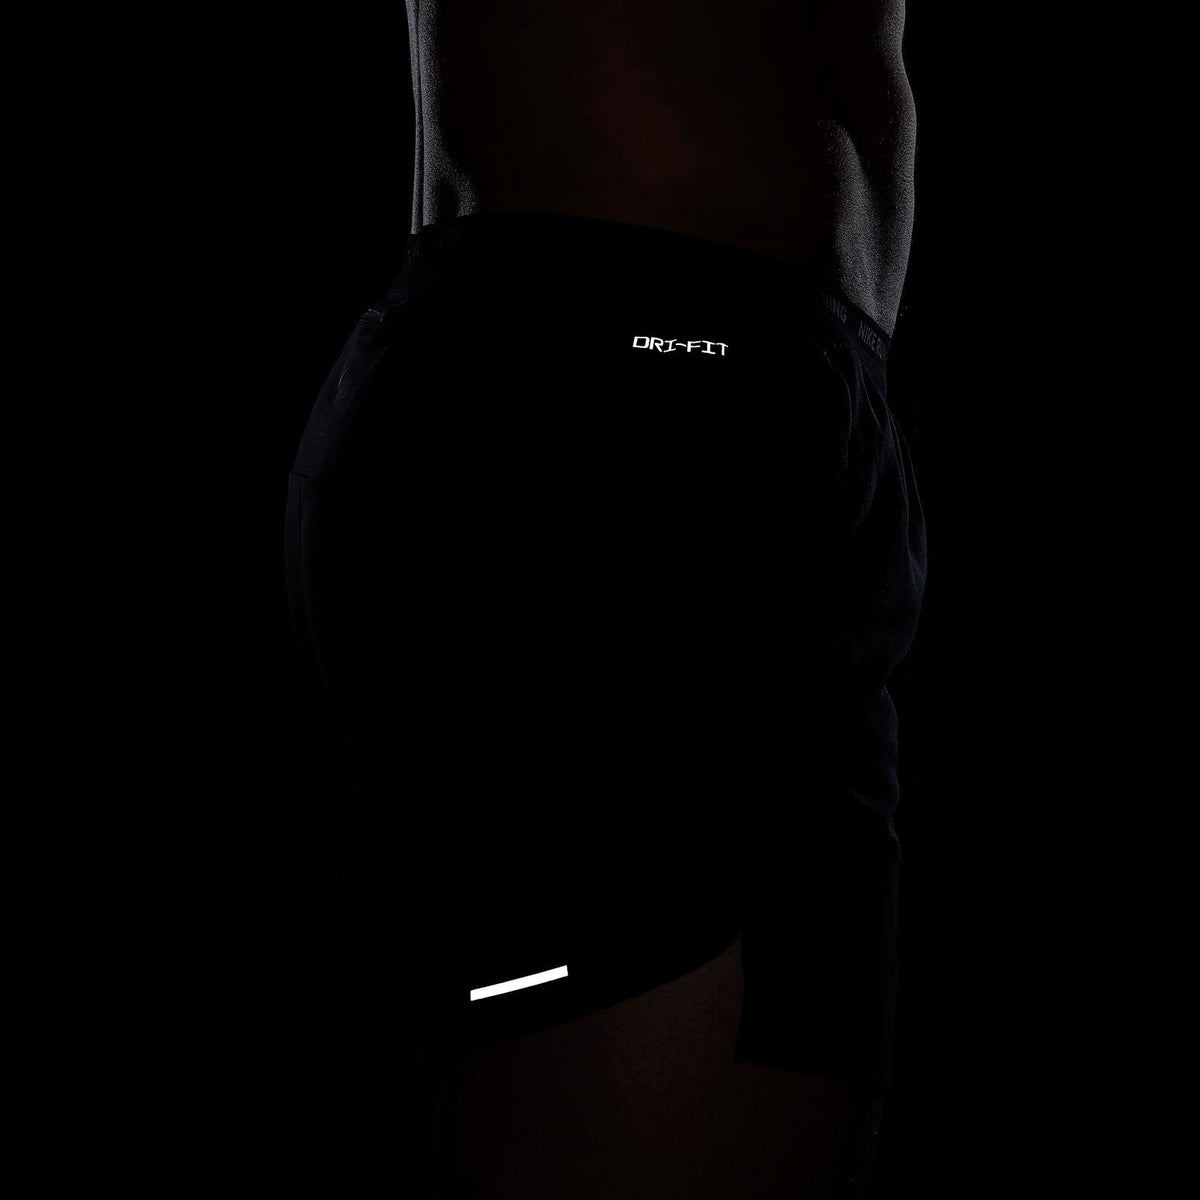 Nike Running Energy Stride 5&quot; Mens APPAREL - Mens Shorts 